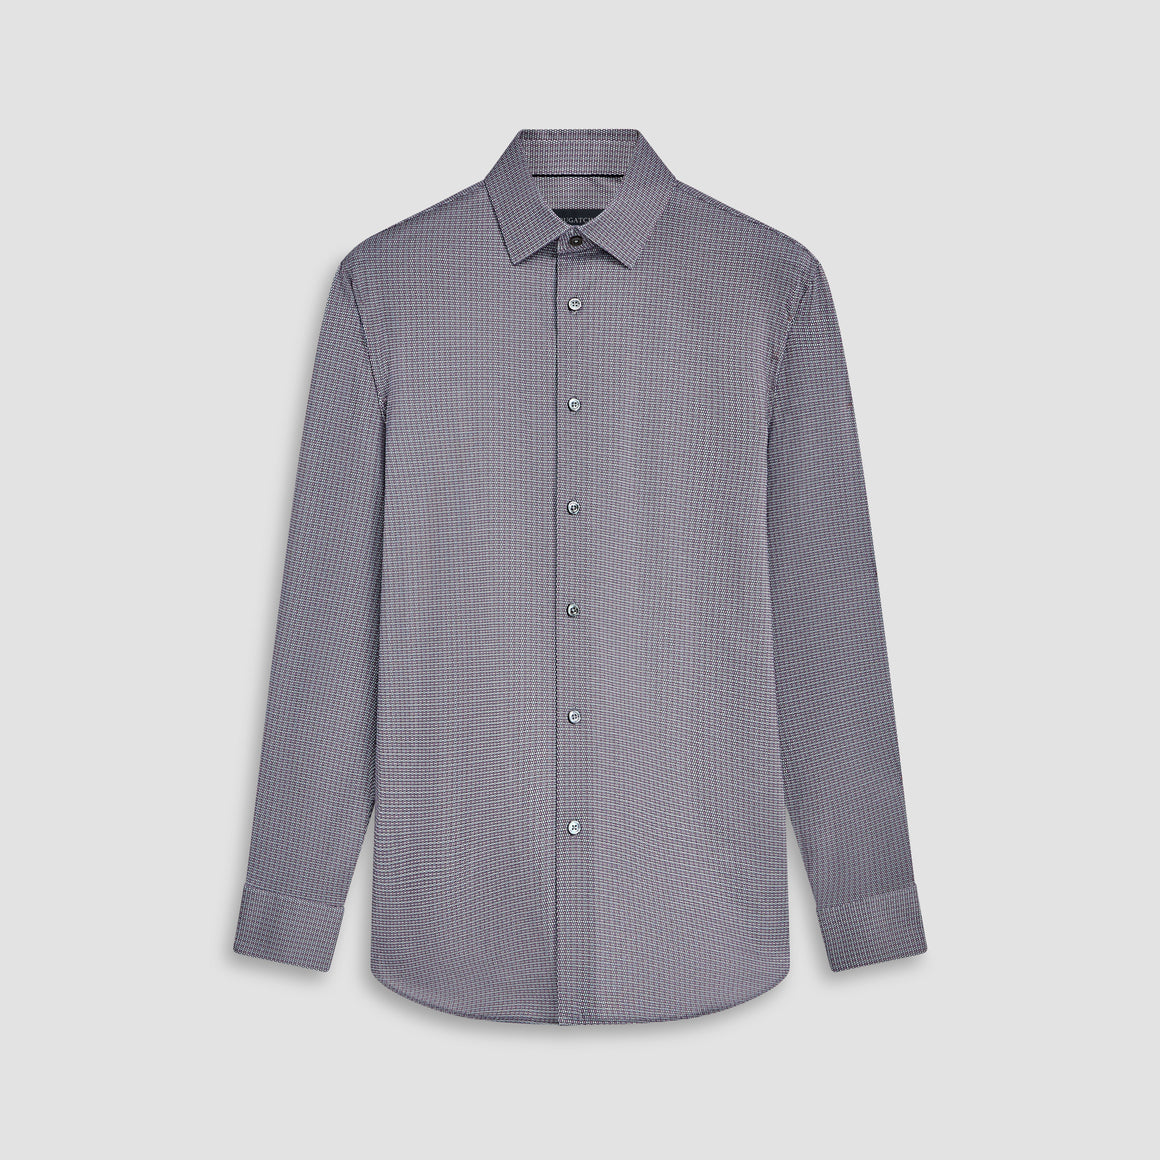 OOOHCotton James Long Sleeve Shirt Geometric Zinc